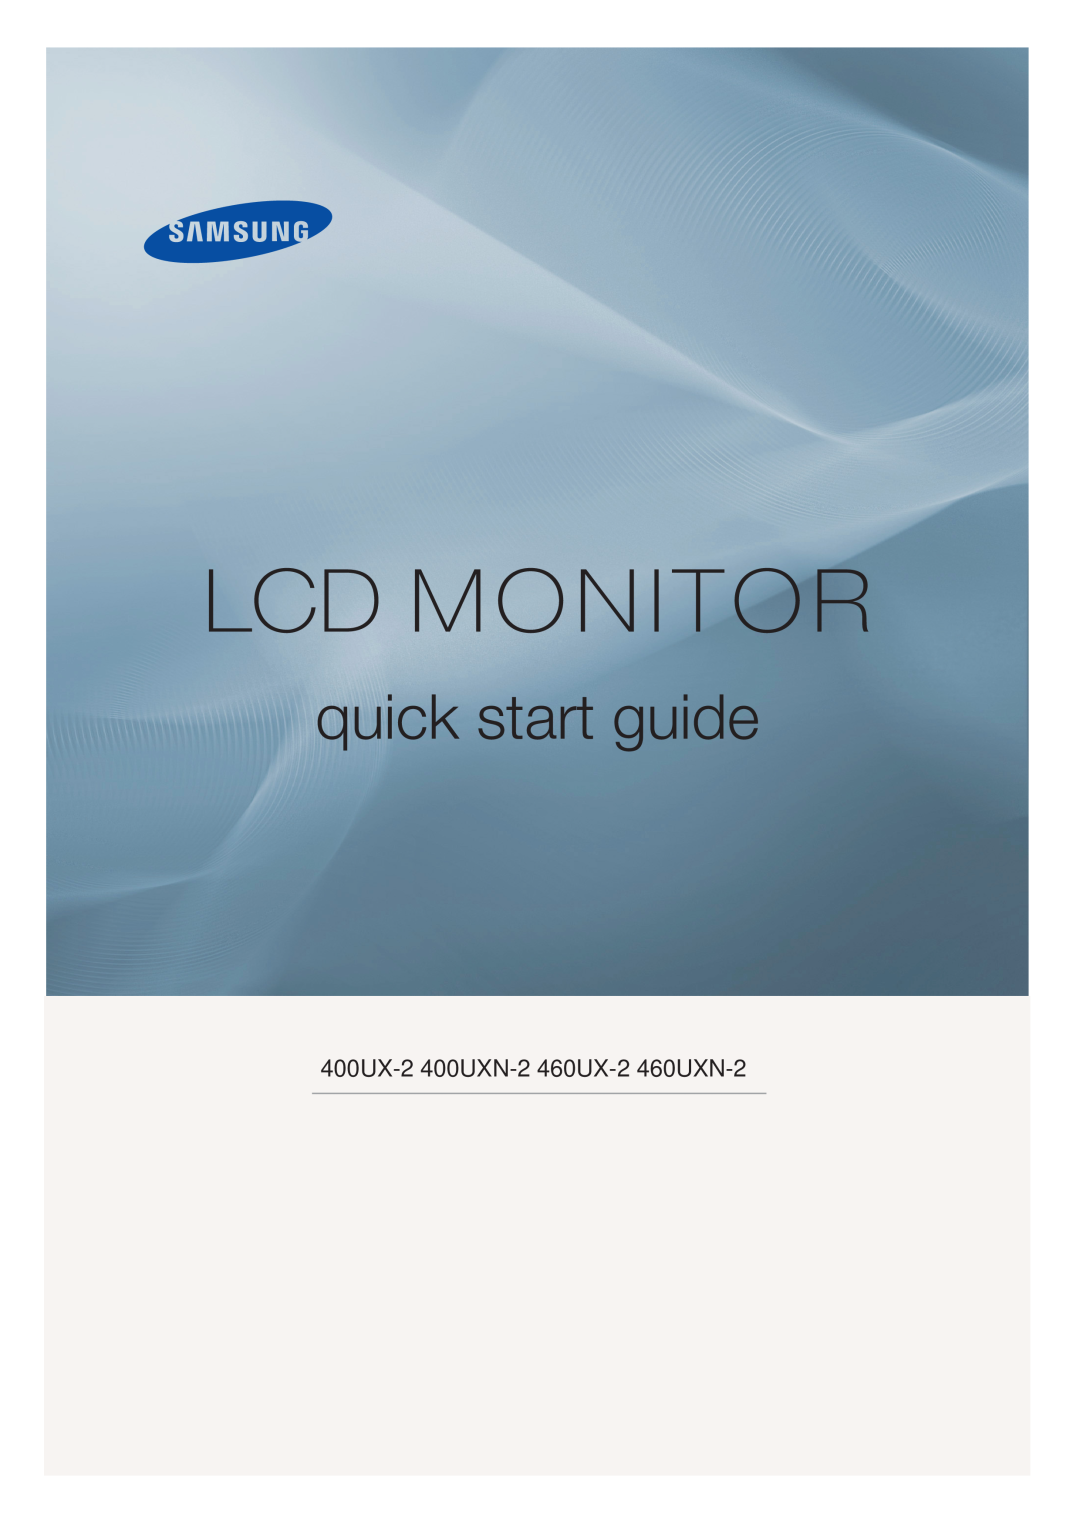 Samsung LH40MRPLBF/EN, LH40MRTLBC/EN manual Lcd Monitor, quick start guide, 400UX-2 400UXN-2 460UX-2 460UXN-2 